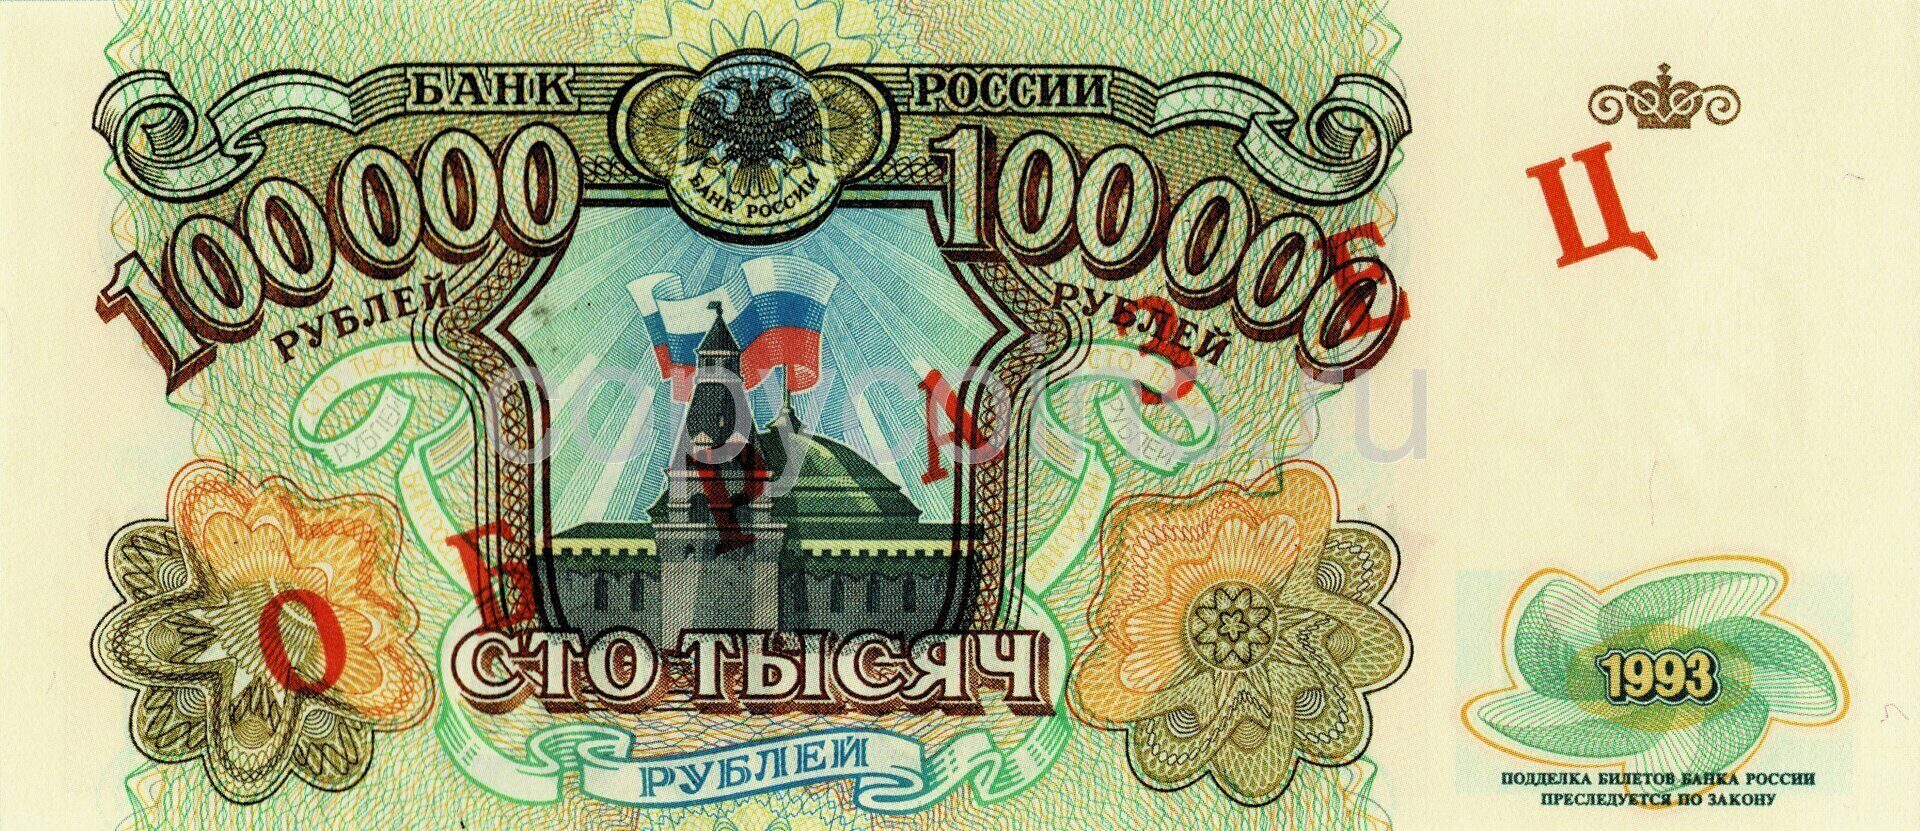 100000 1000 1. Банкнота 100000 рублей 1993. 100000 Рублей купюра 1993. 100 000 Рублей купюра 1993 года. Банкнота 100000 рублей 1993 года.